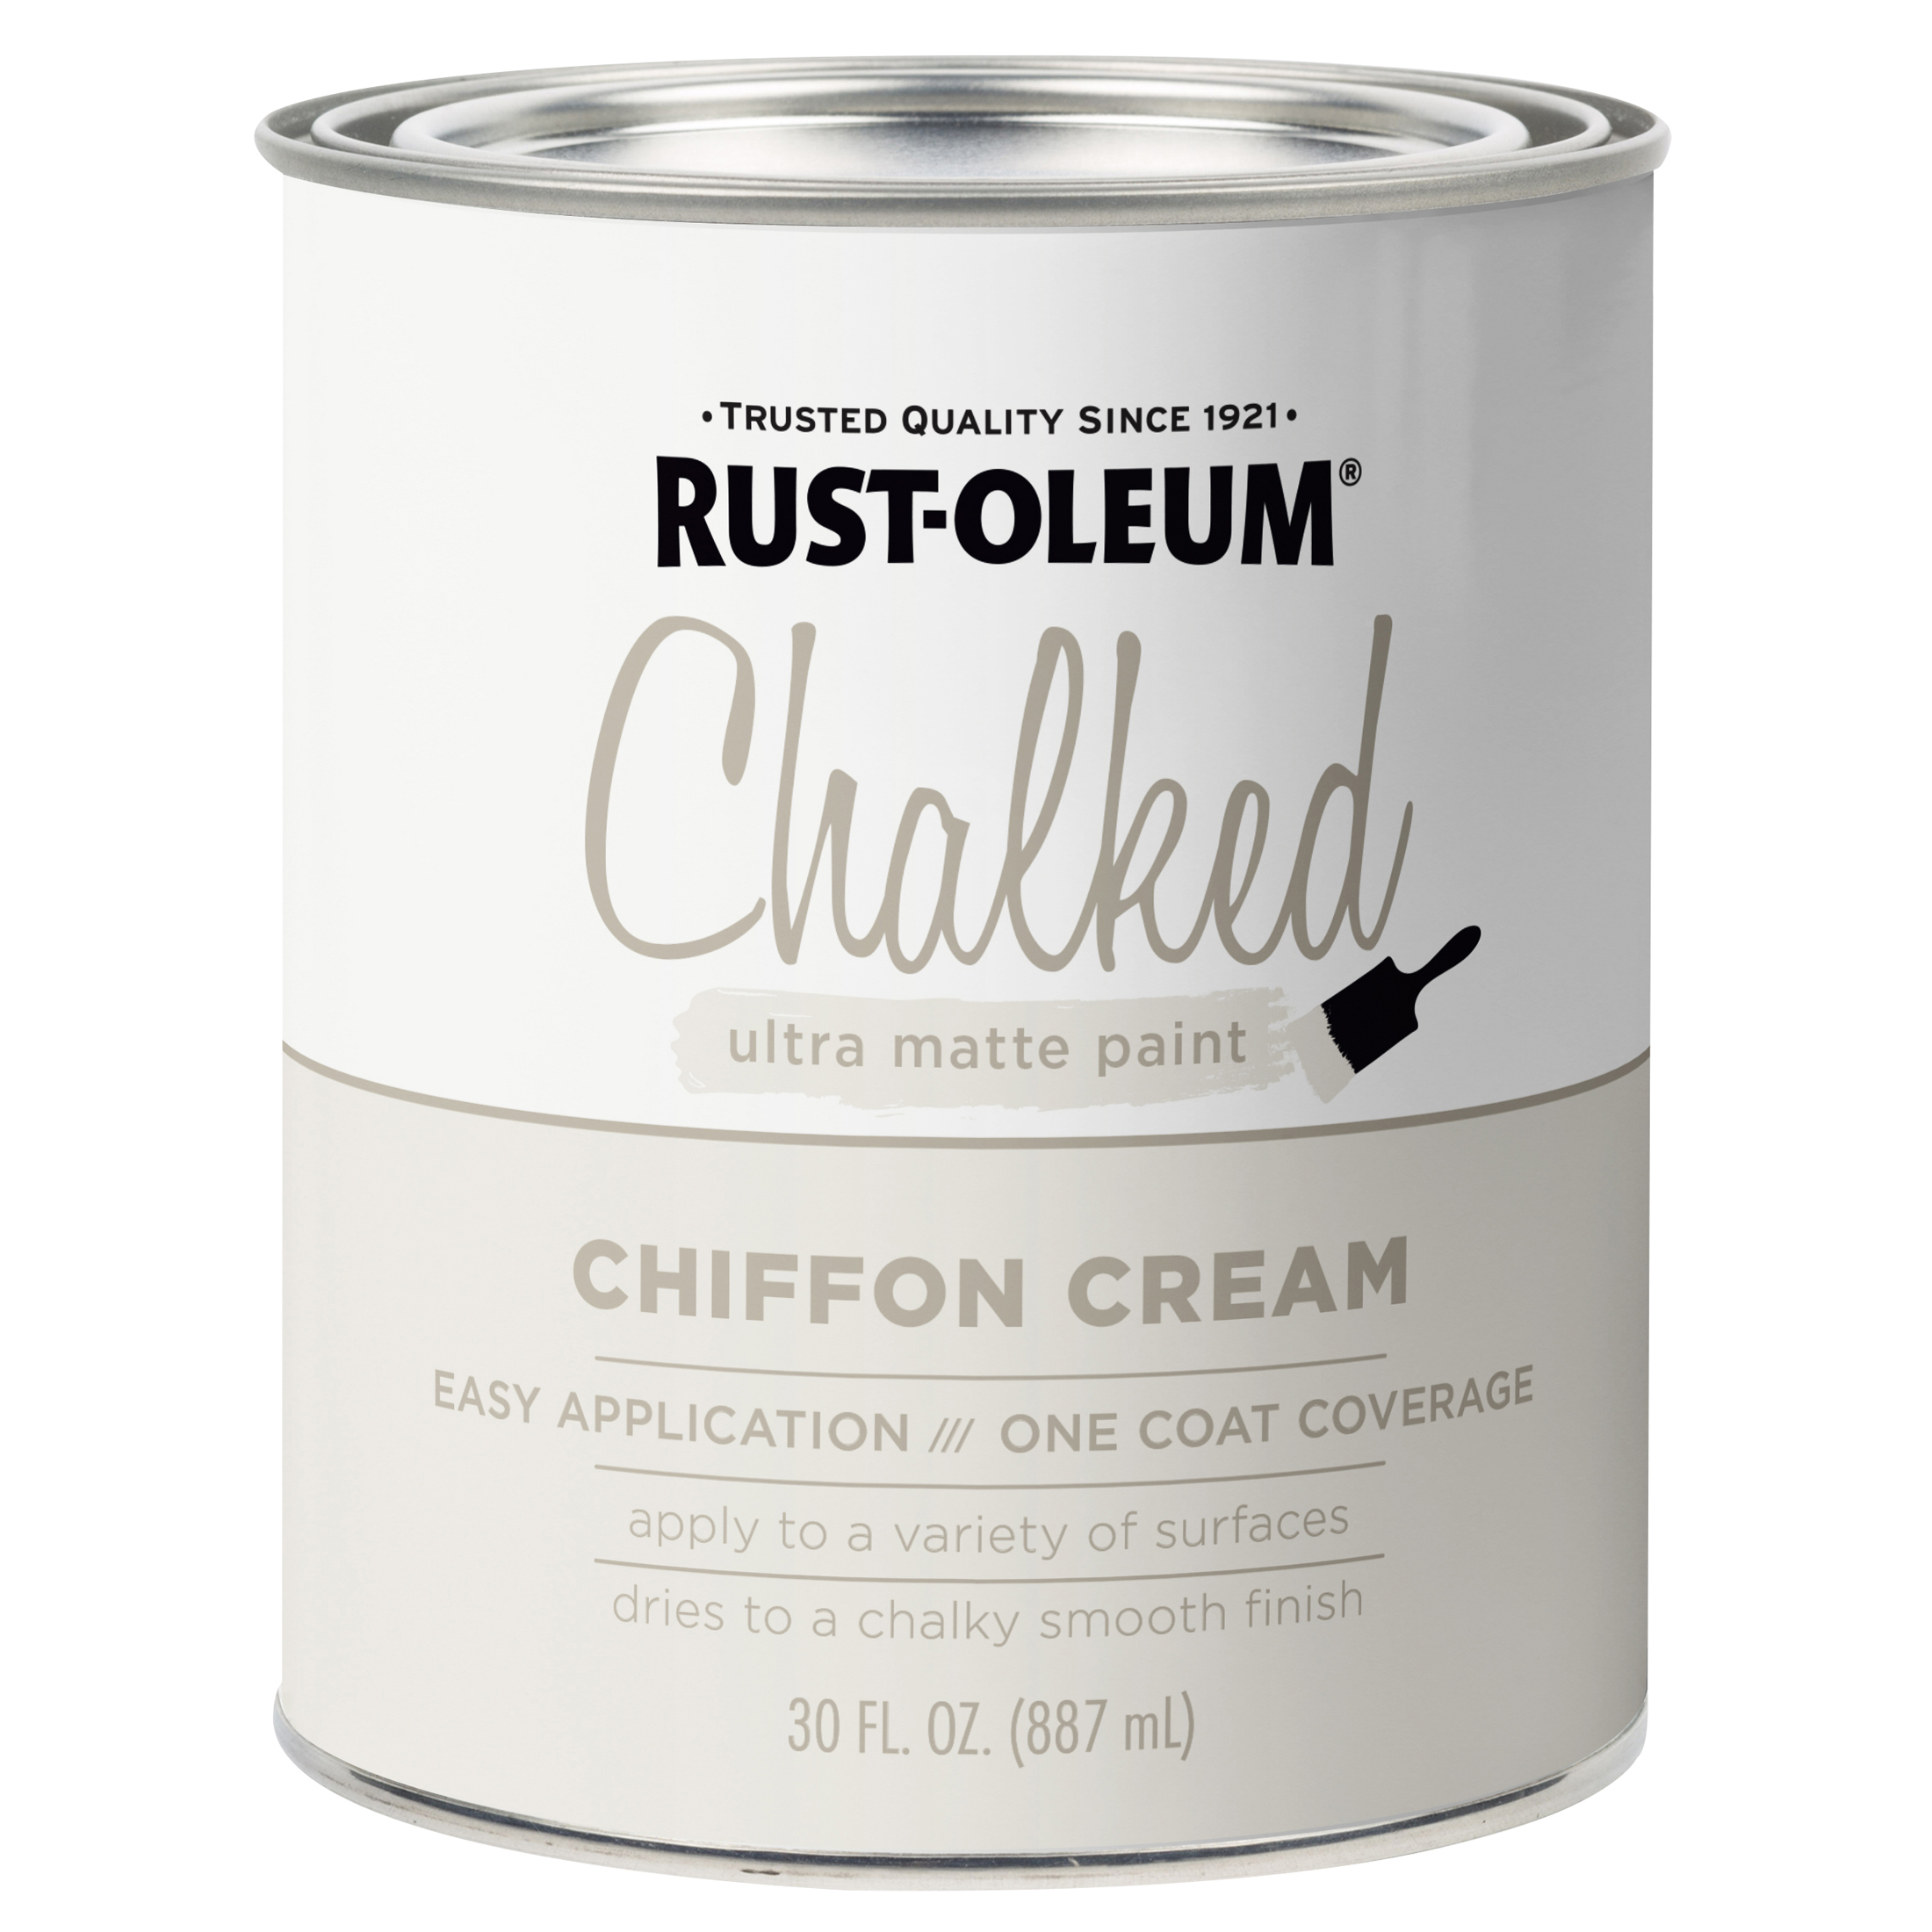 Chiffon Cream, Rust-Oleum Chalked Ultra Matte Paint, Quart - image 3 of 10